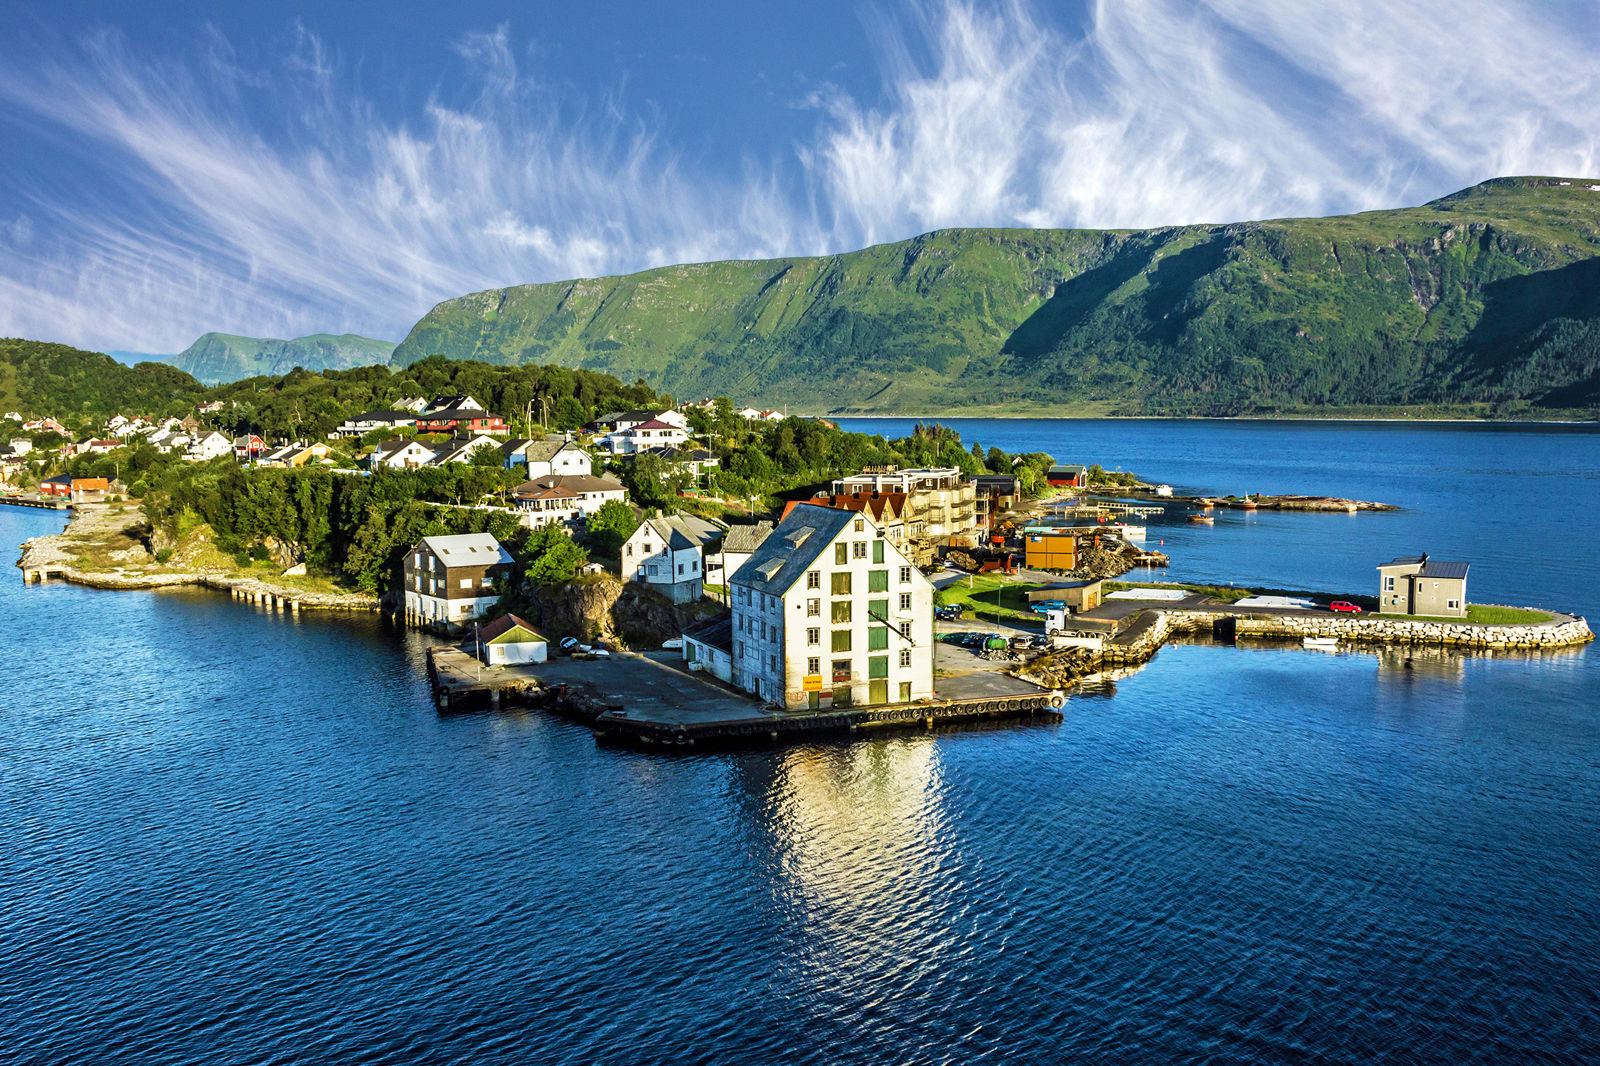 Cruise Noorse Fjorden&Steden incl. busreis corendon